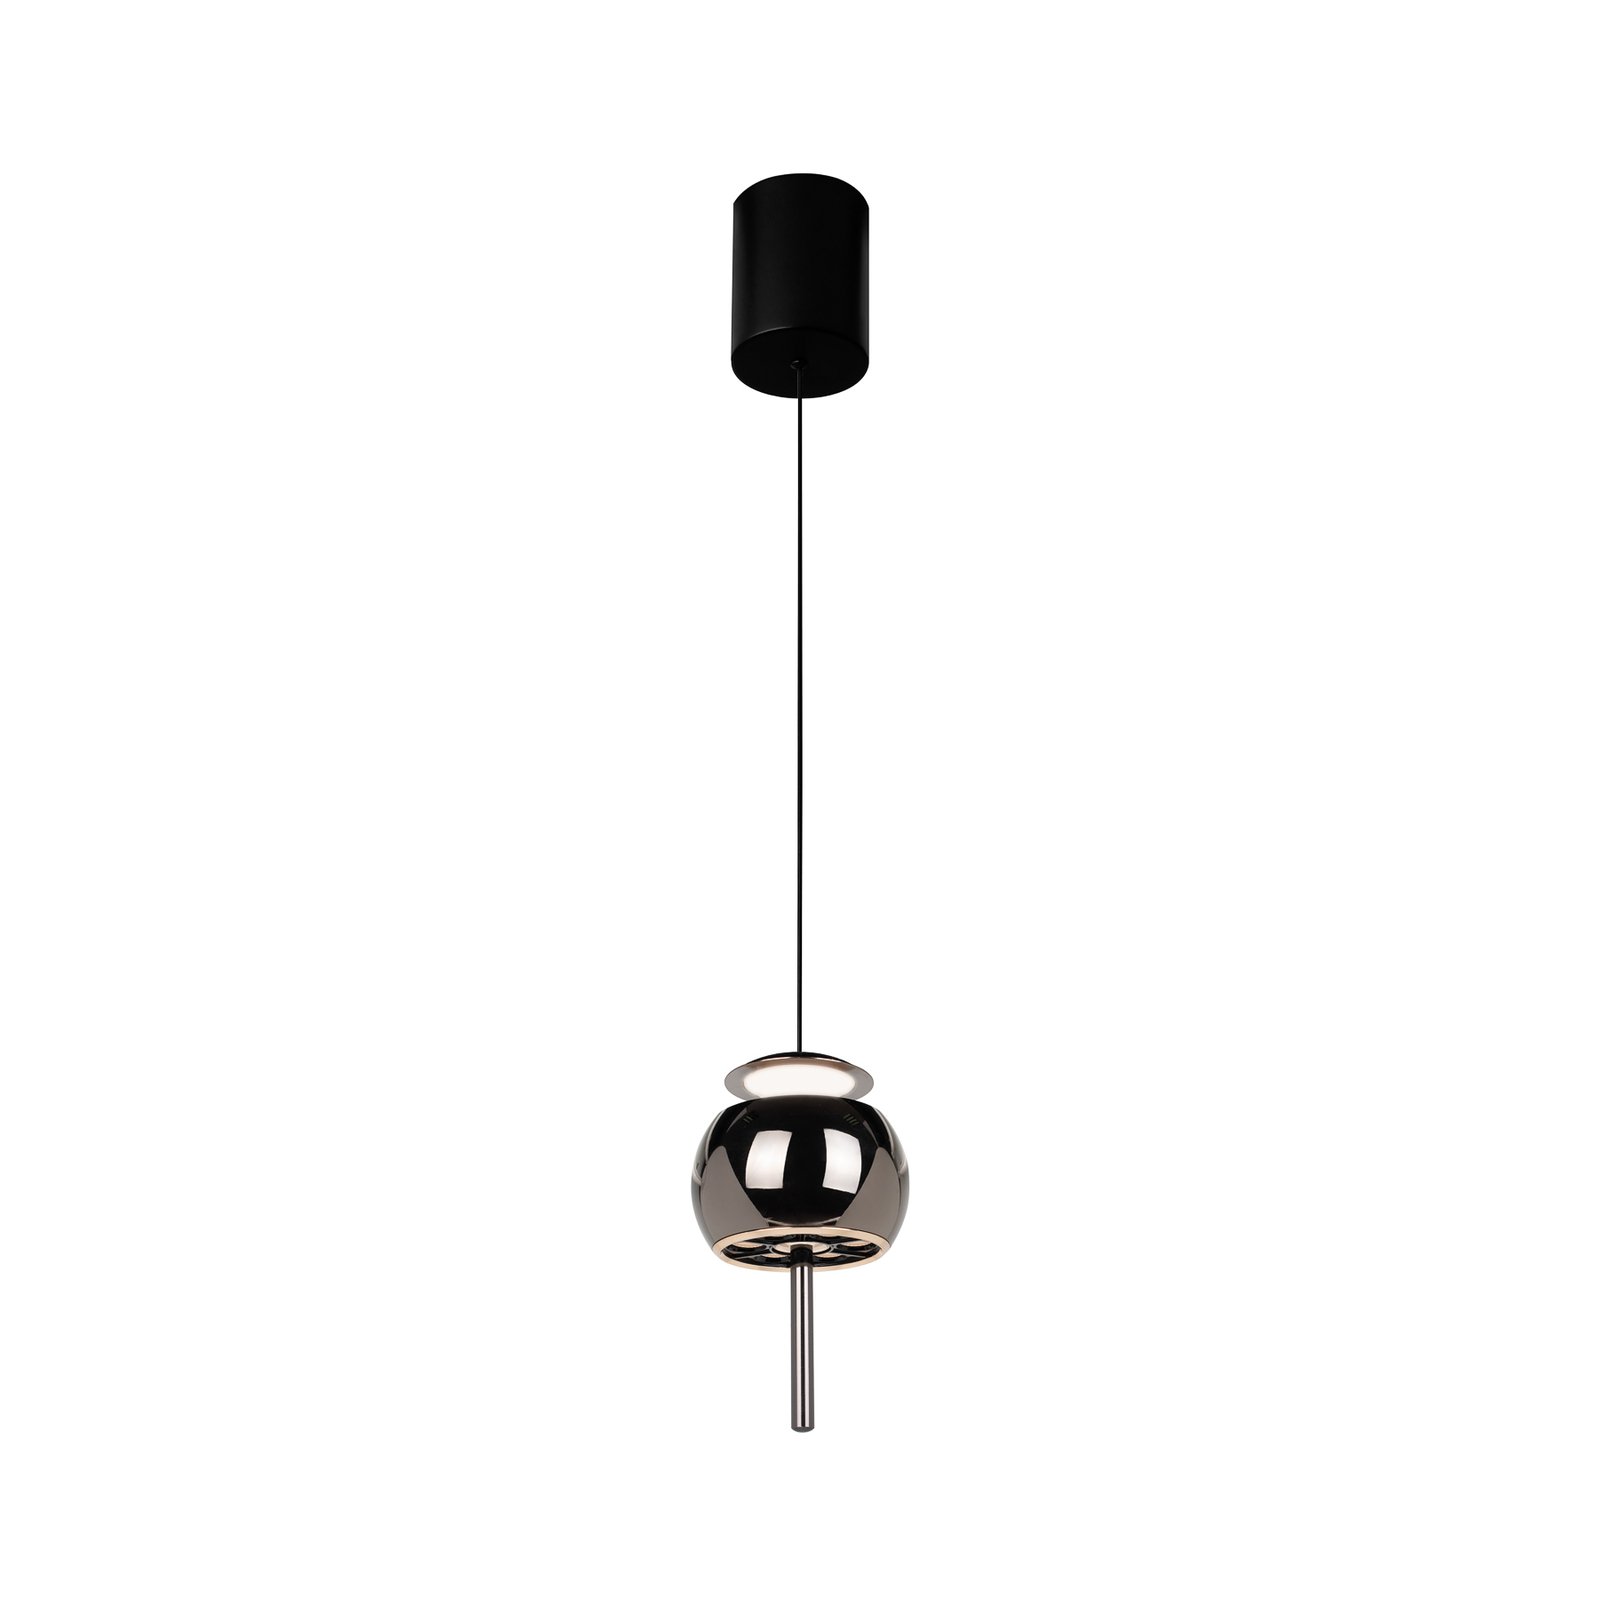 Roller LED hanglamp, chroom-zwart, verstelbaar, trekstang